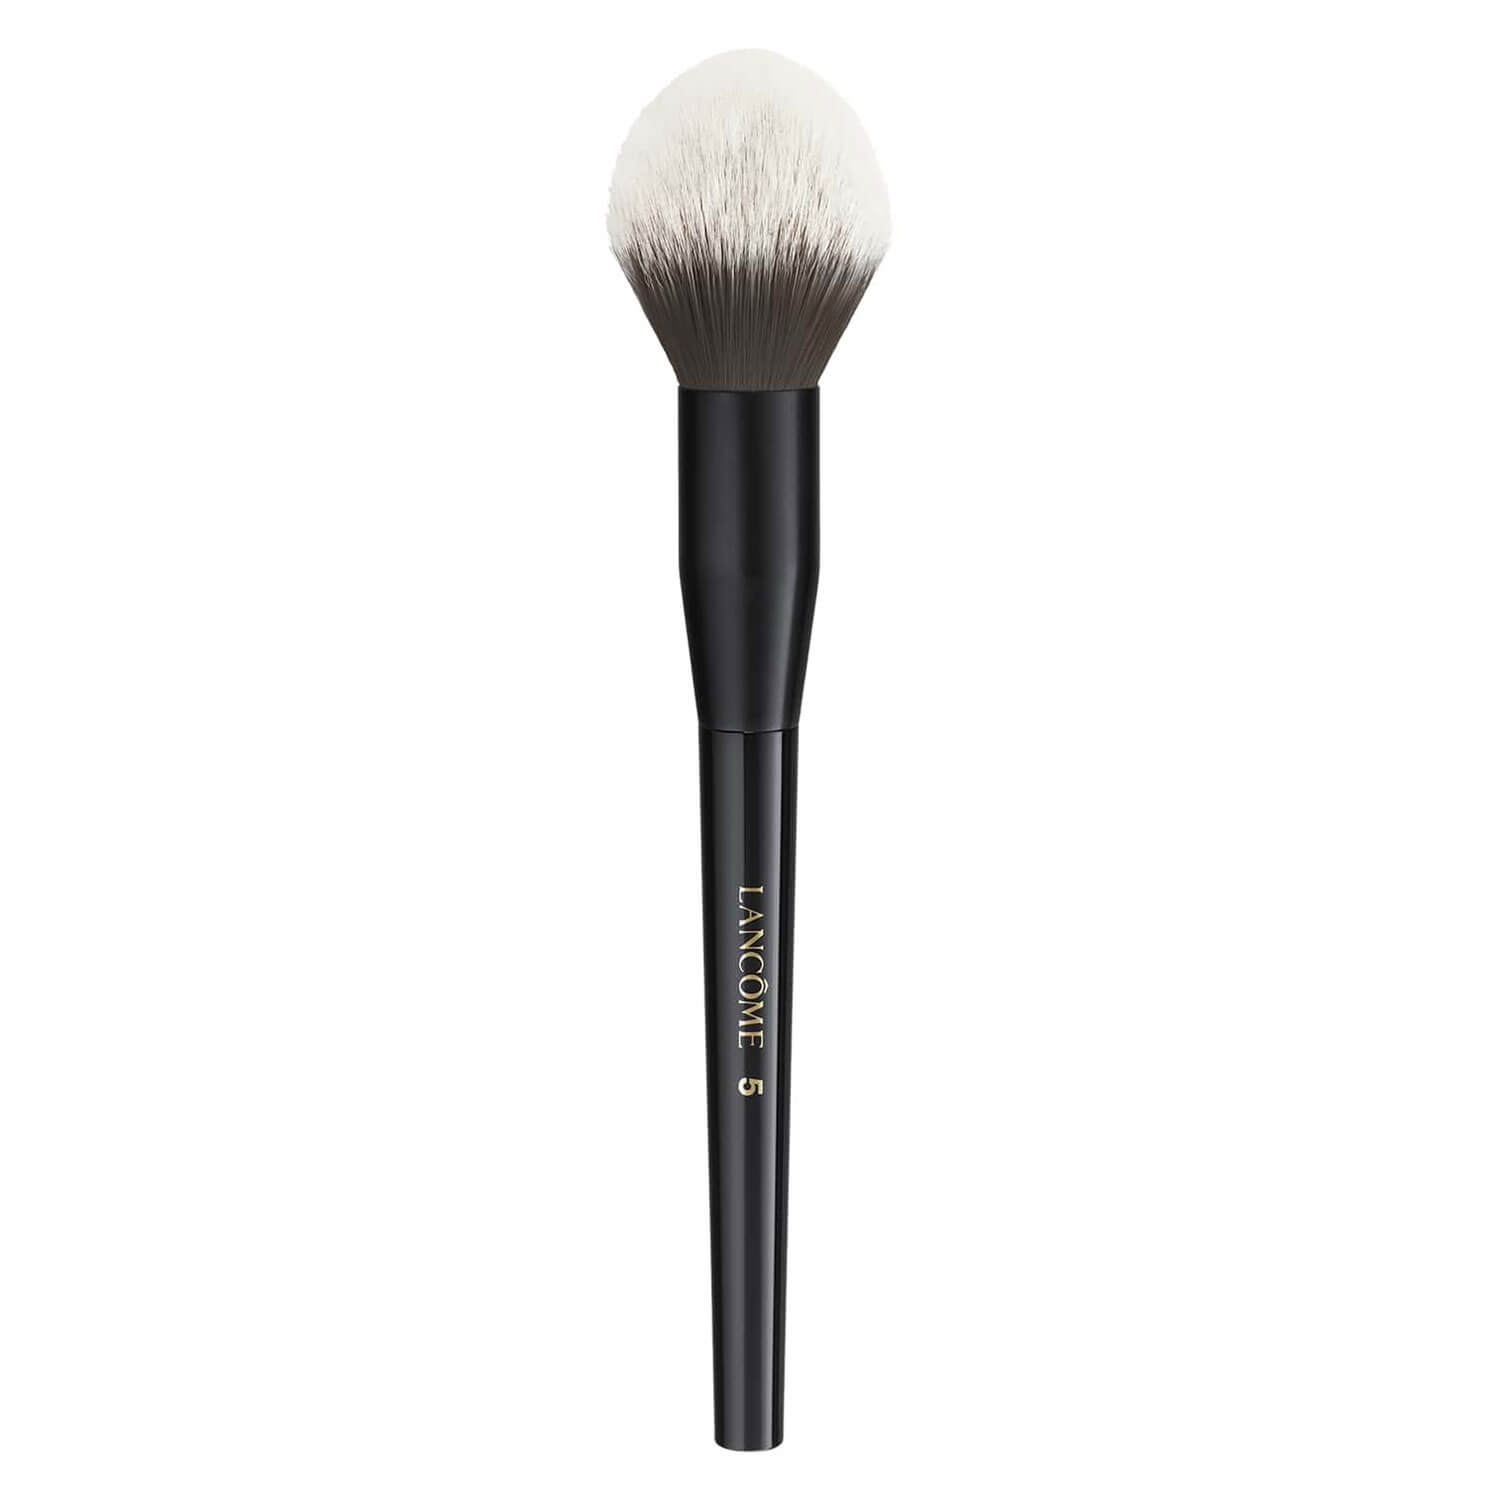 Product image from Lancôme Tools - Lush Full Face Powder Brush 05